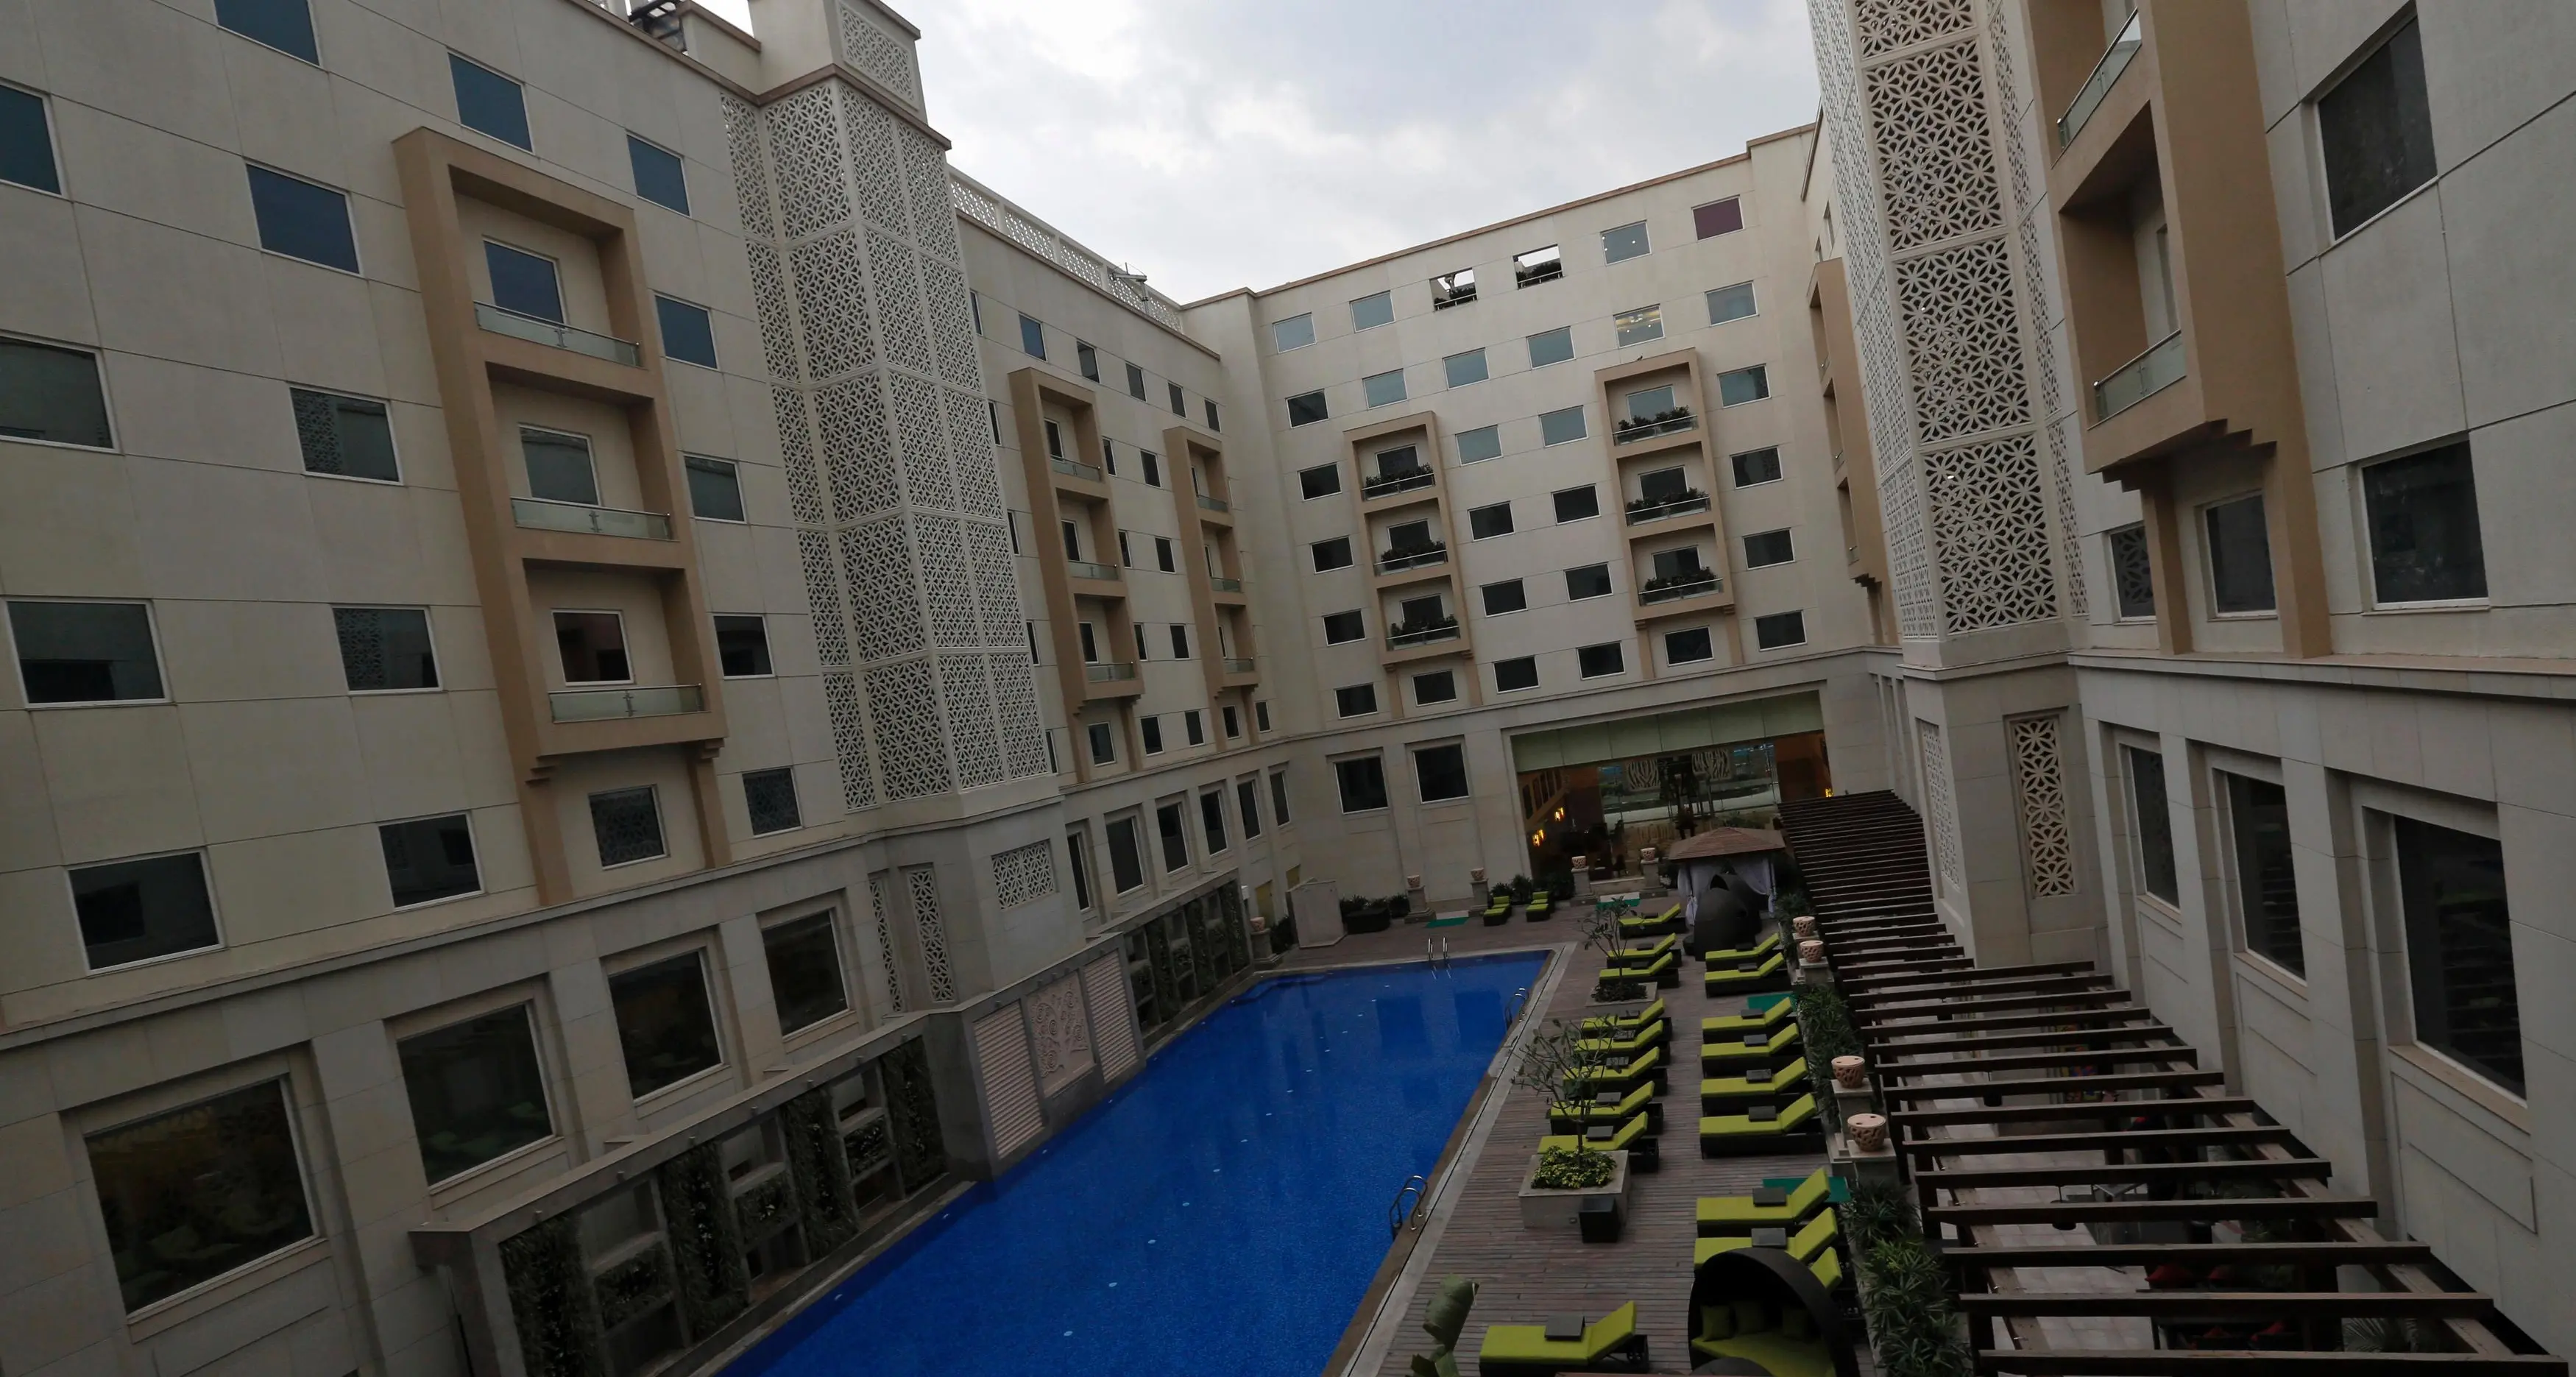 Indias Lemon Tree Hotels in GCC push